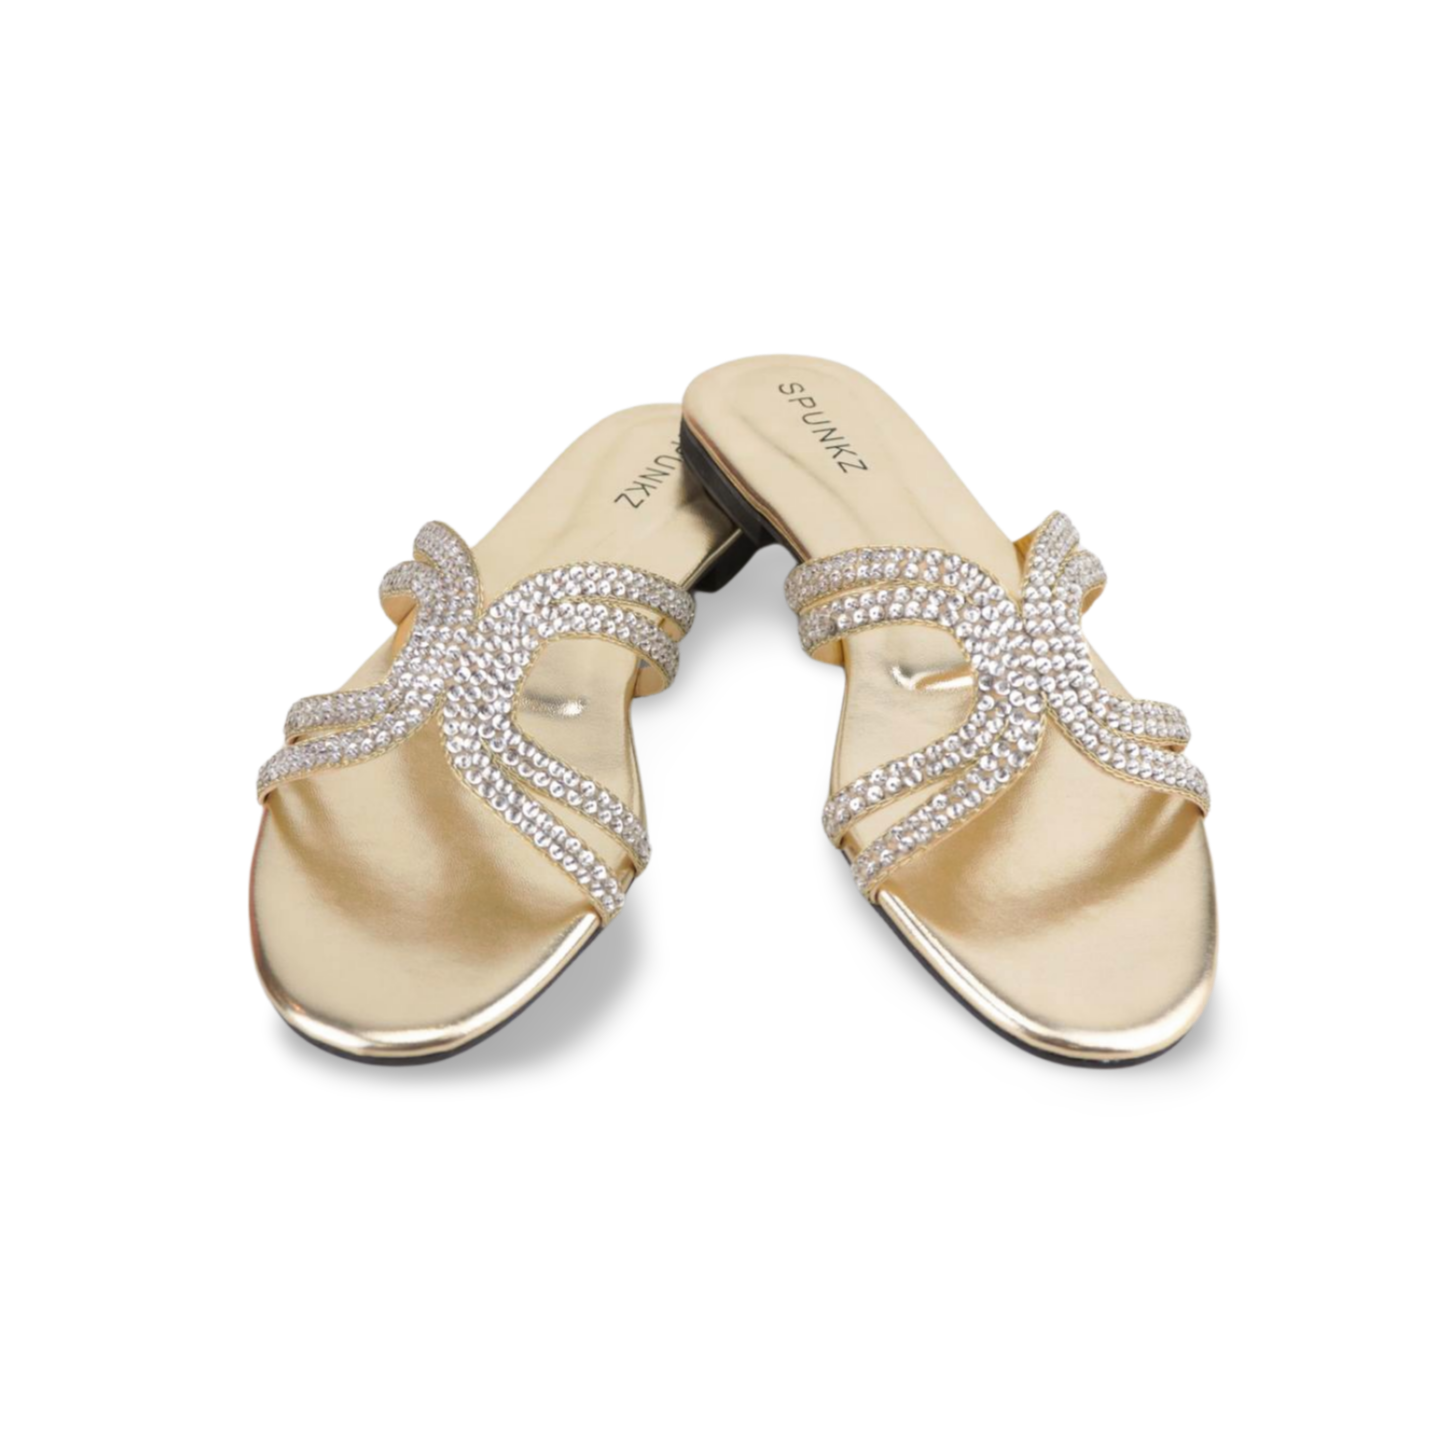 Spunkz Women's Sparkly Flat Sandals with Embellished Straps